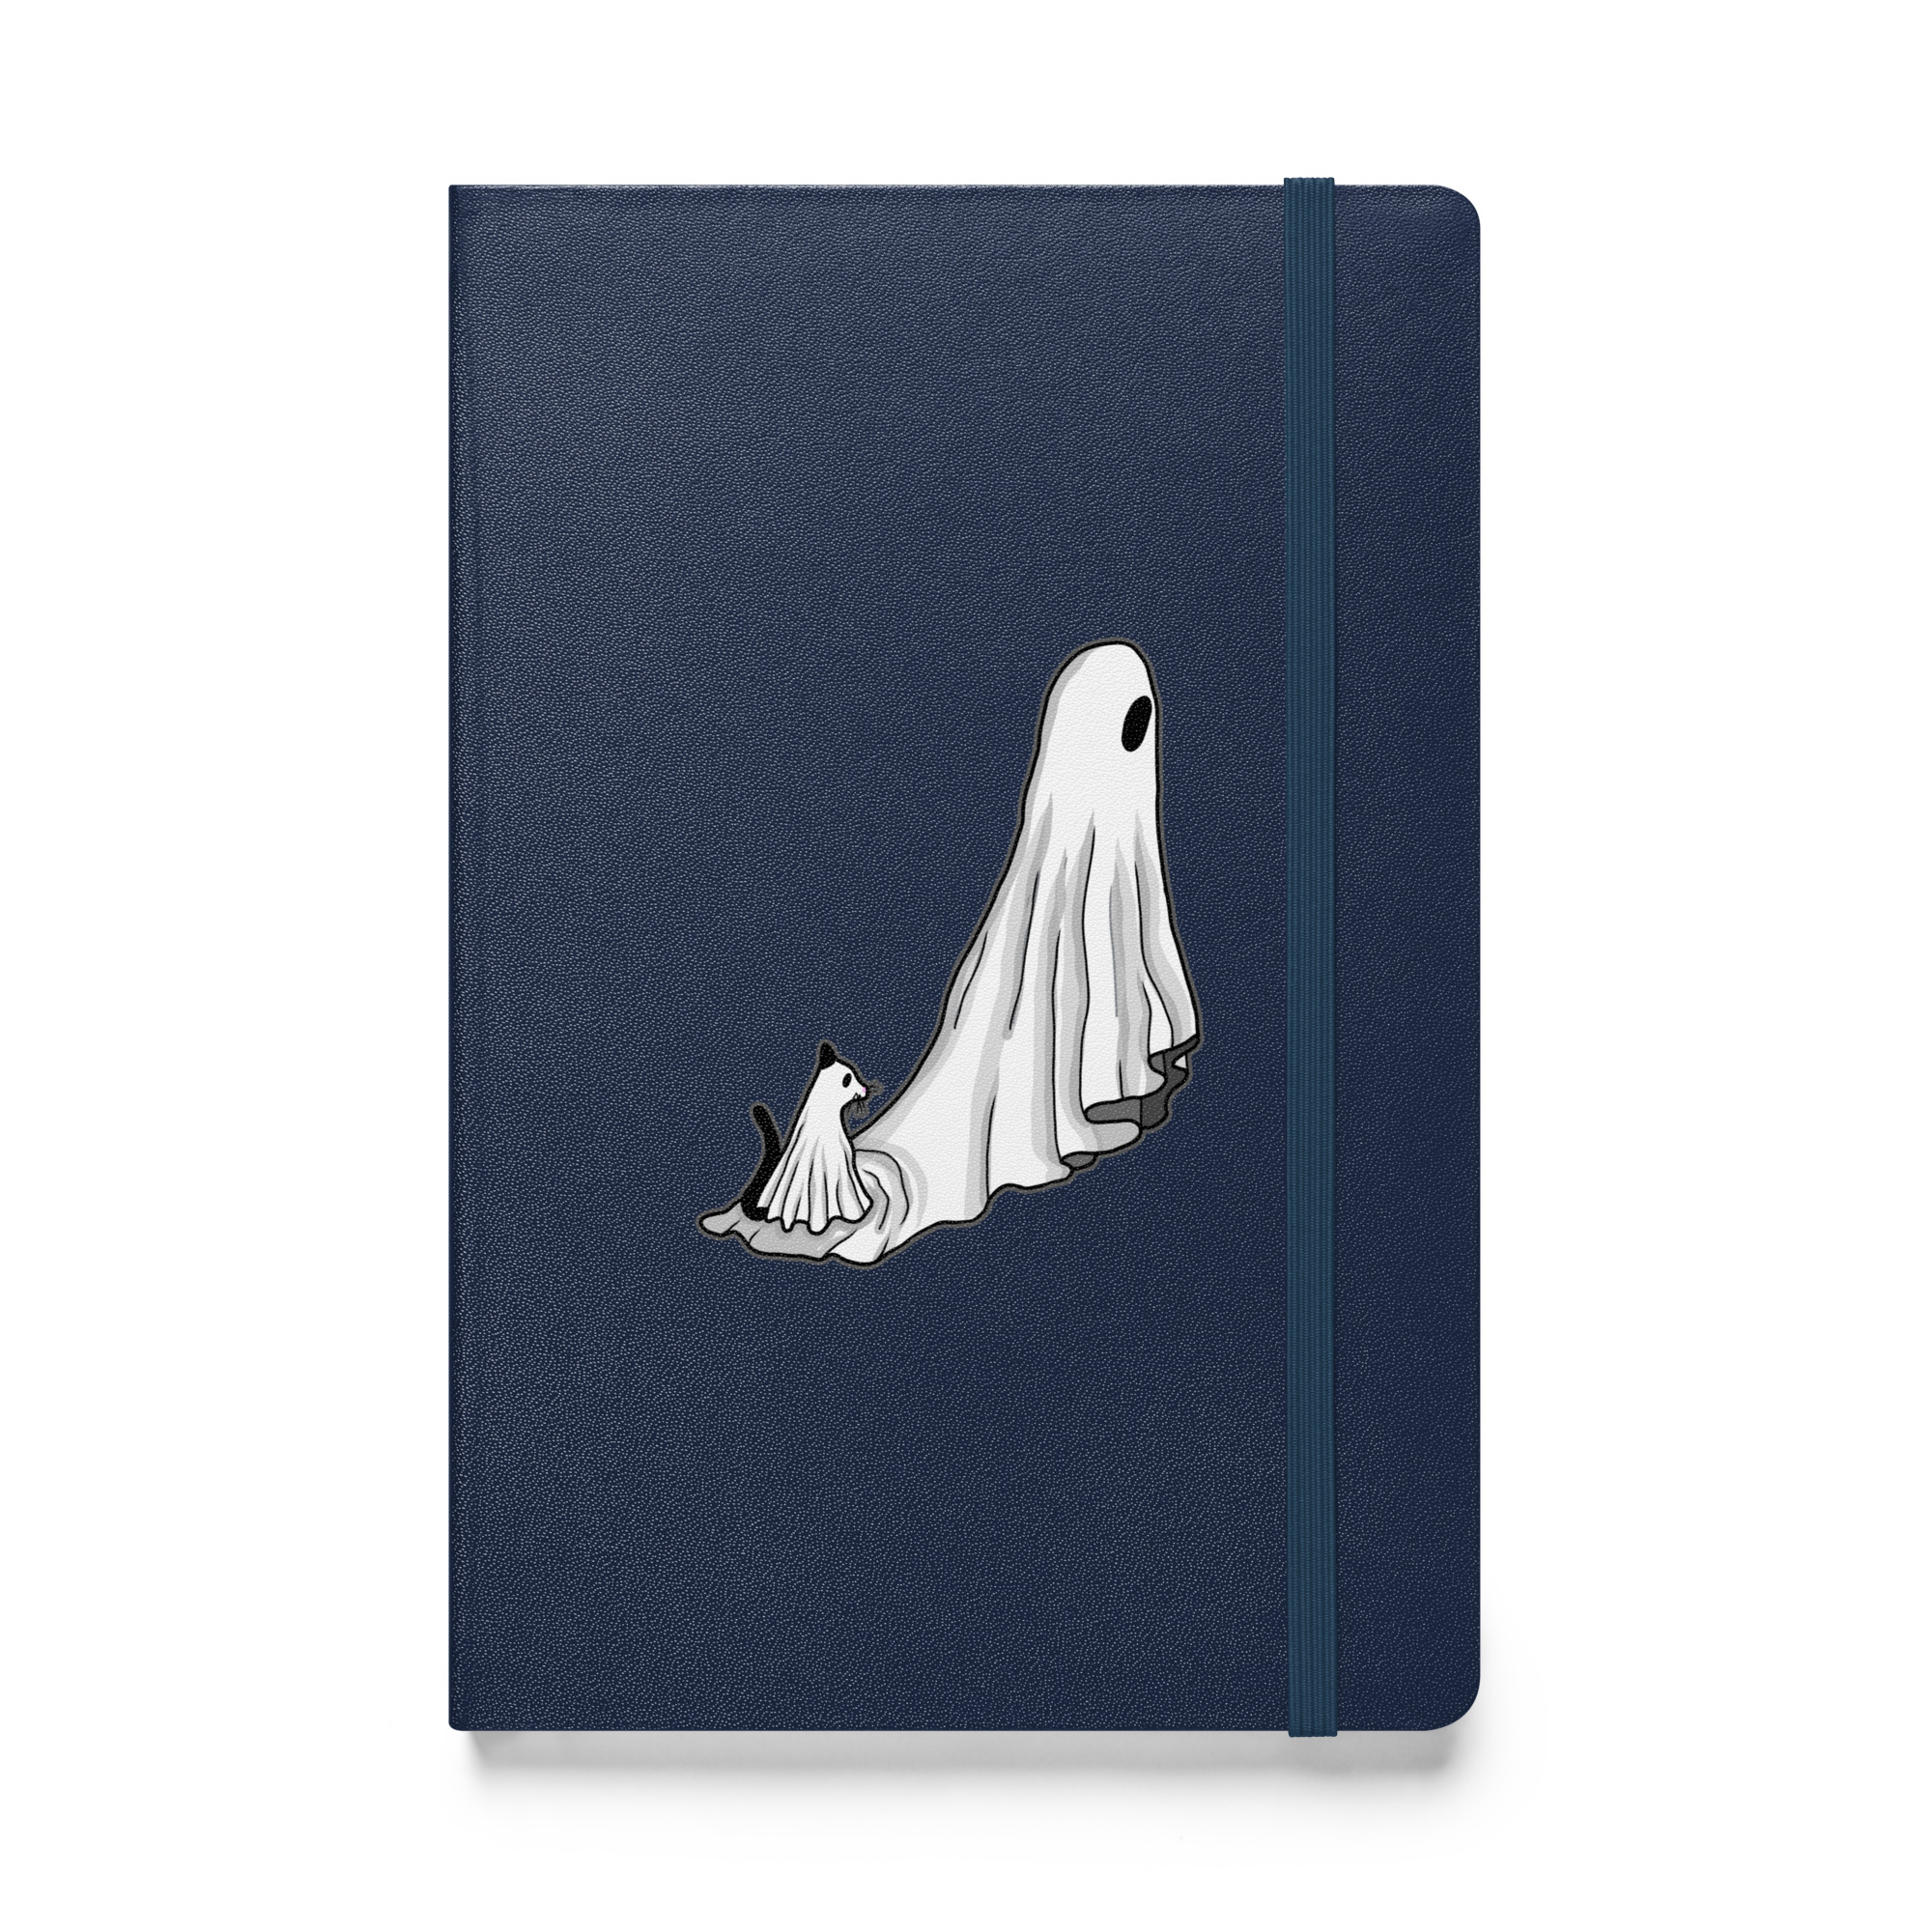 hardcover-bound-notebook-navy-front-6537e8d8bd3b0.jpg